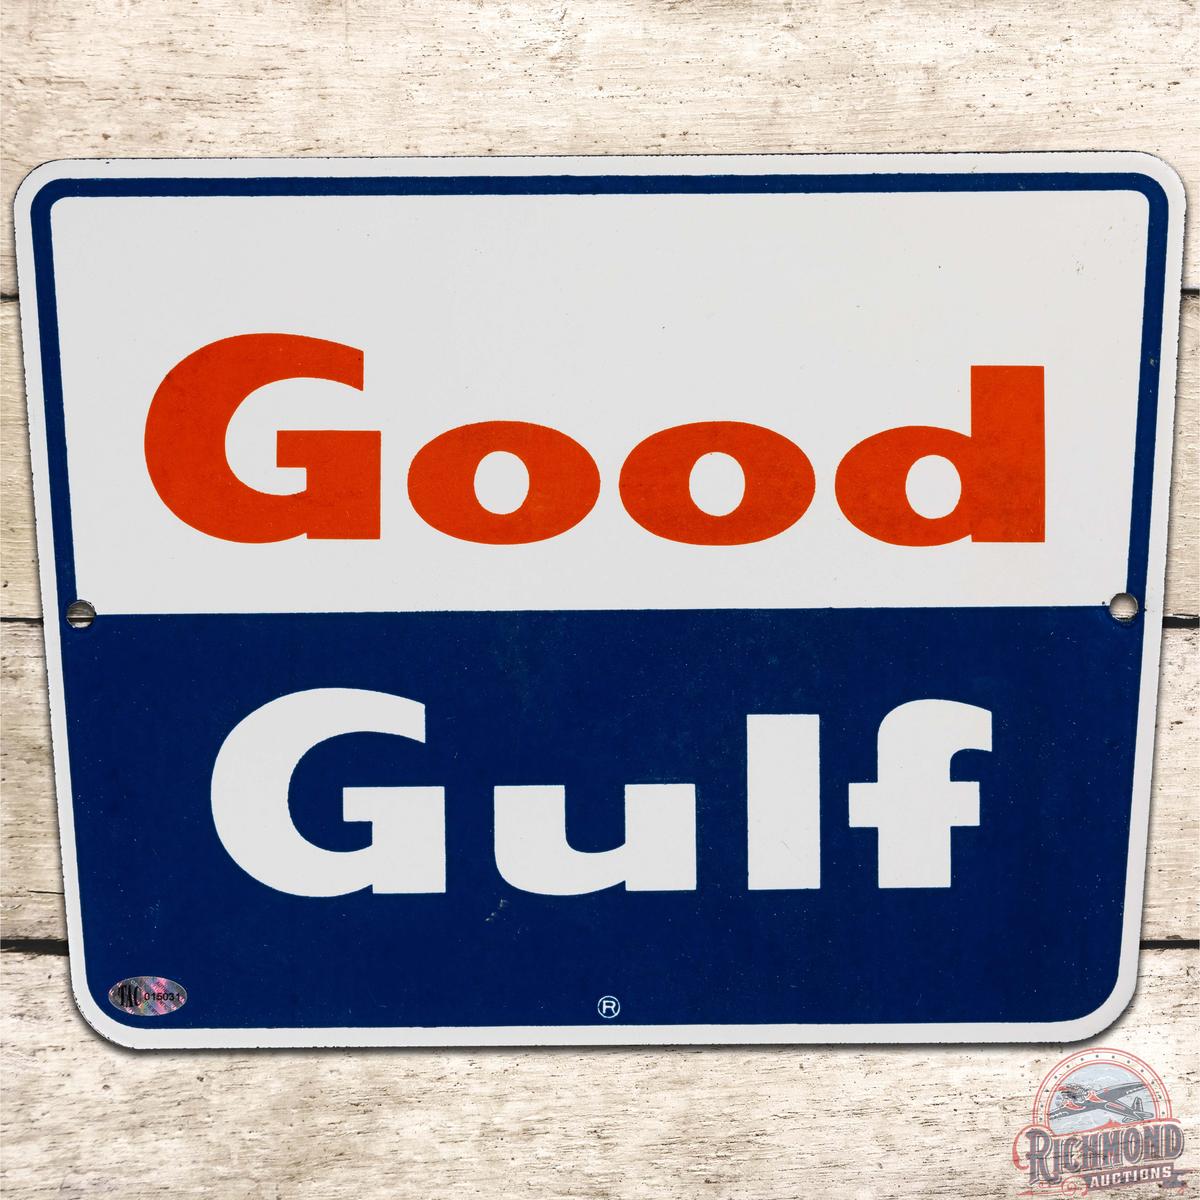 Good Gulf Gasoline SS Porcelain Pump Plate Sign